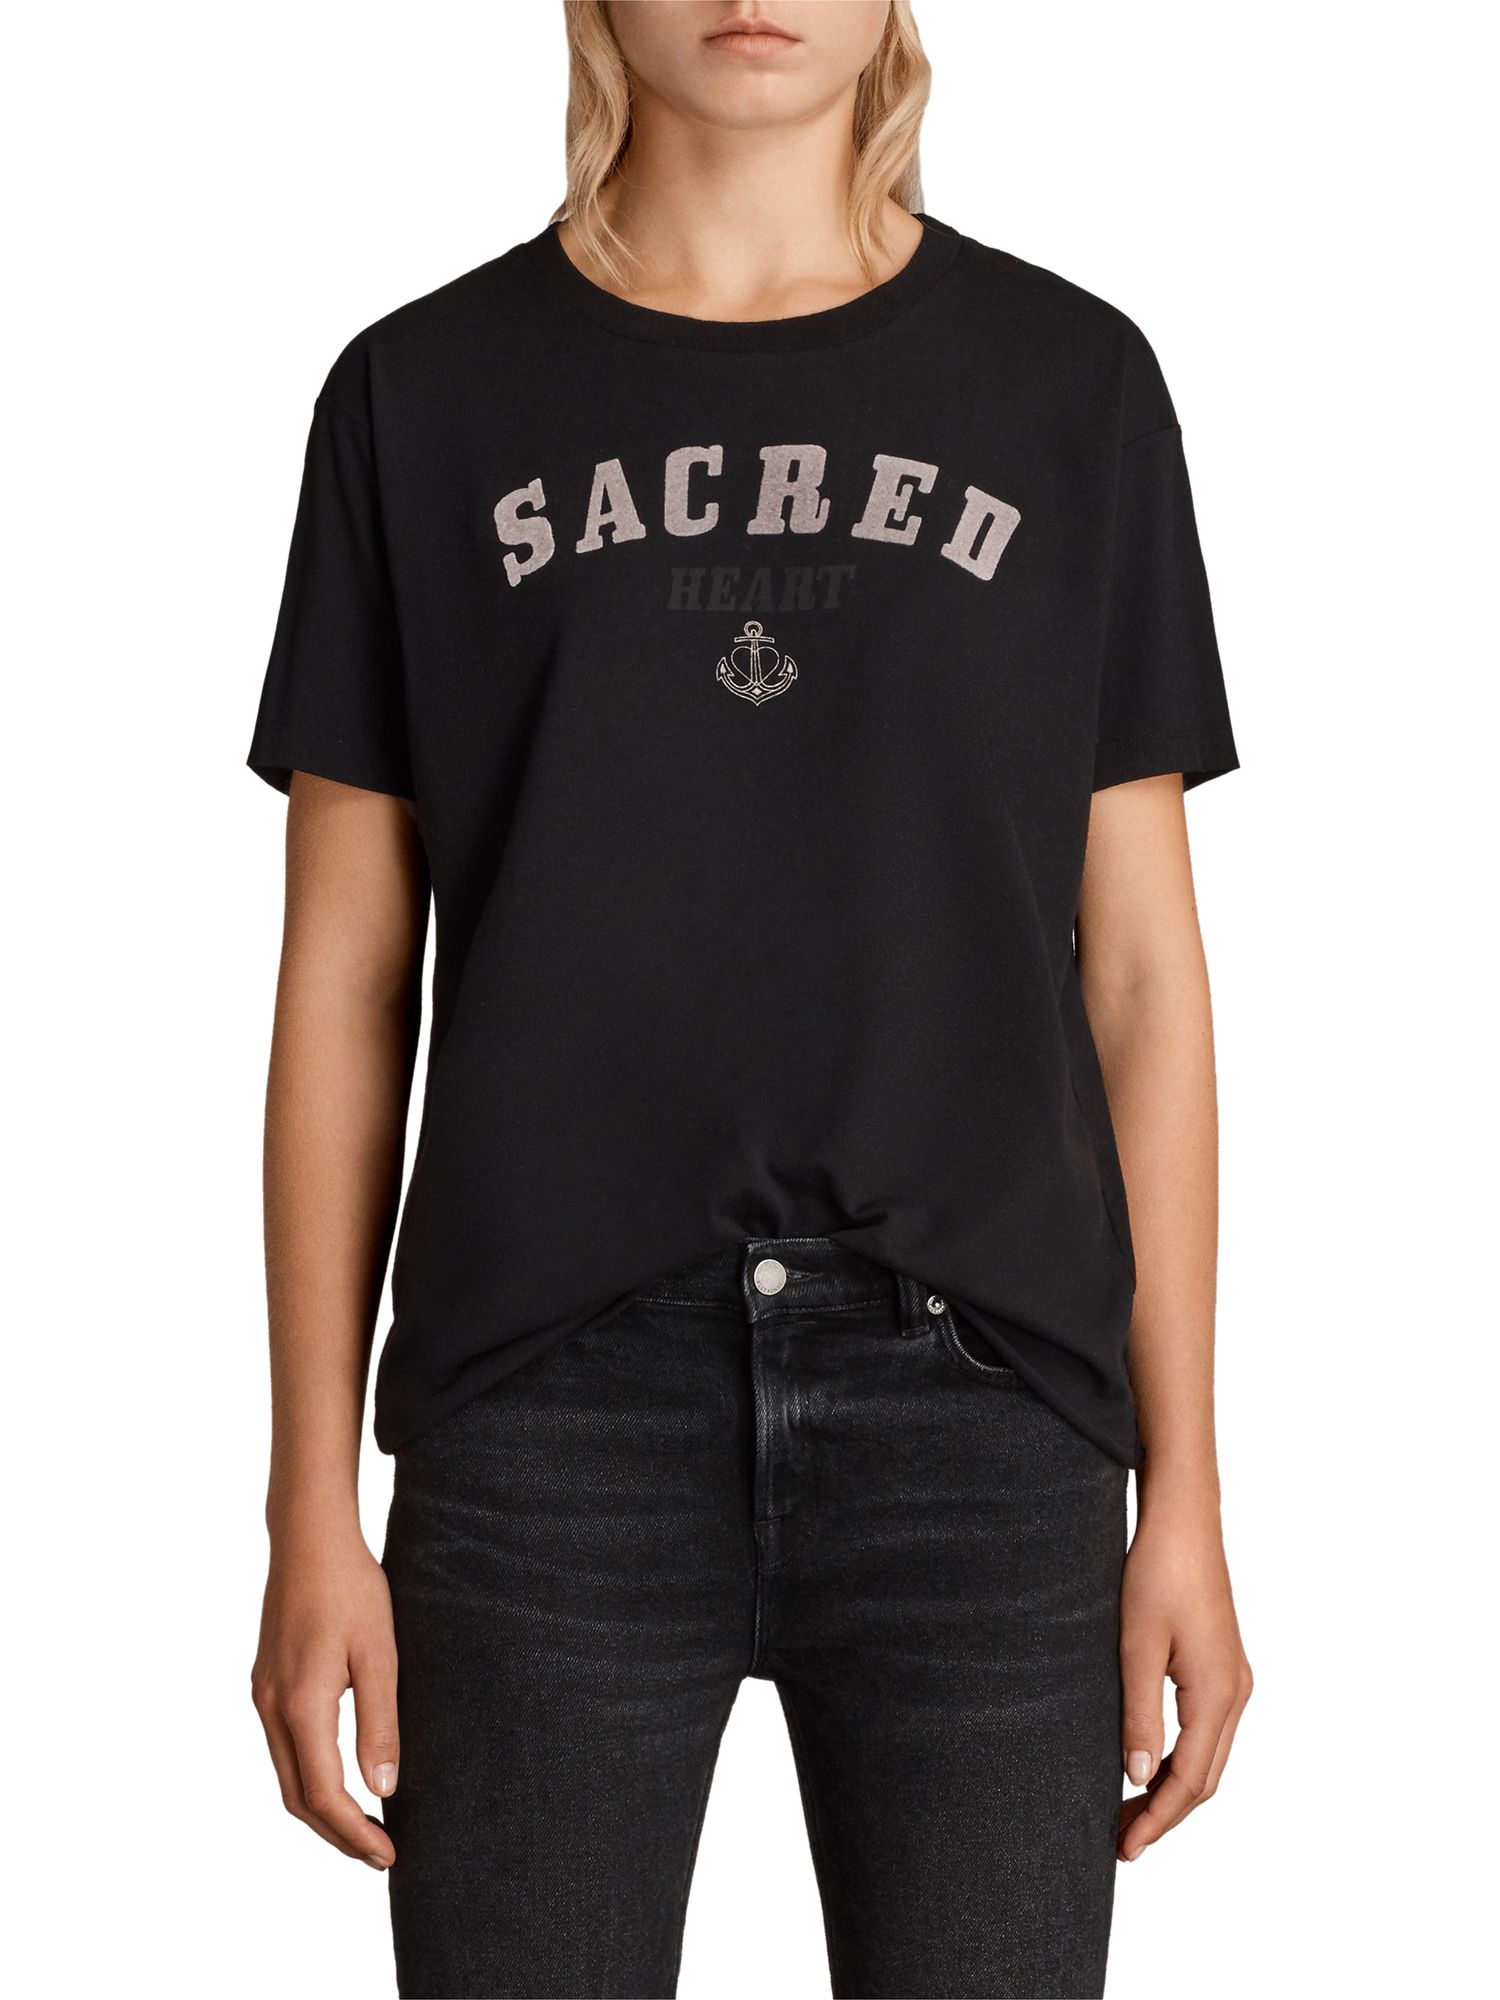 AllSaints Sacred Heart T-Shirt, Black